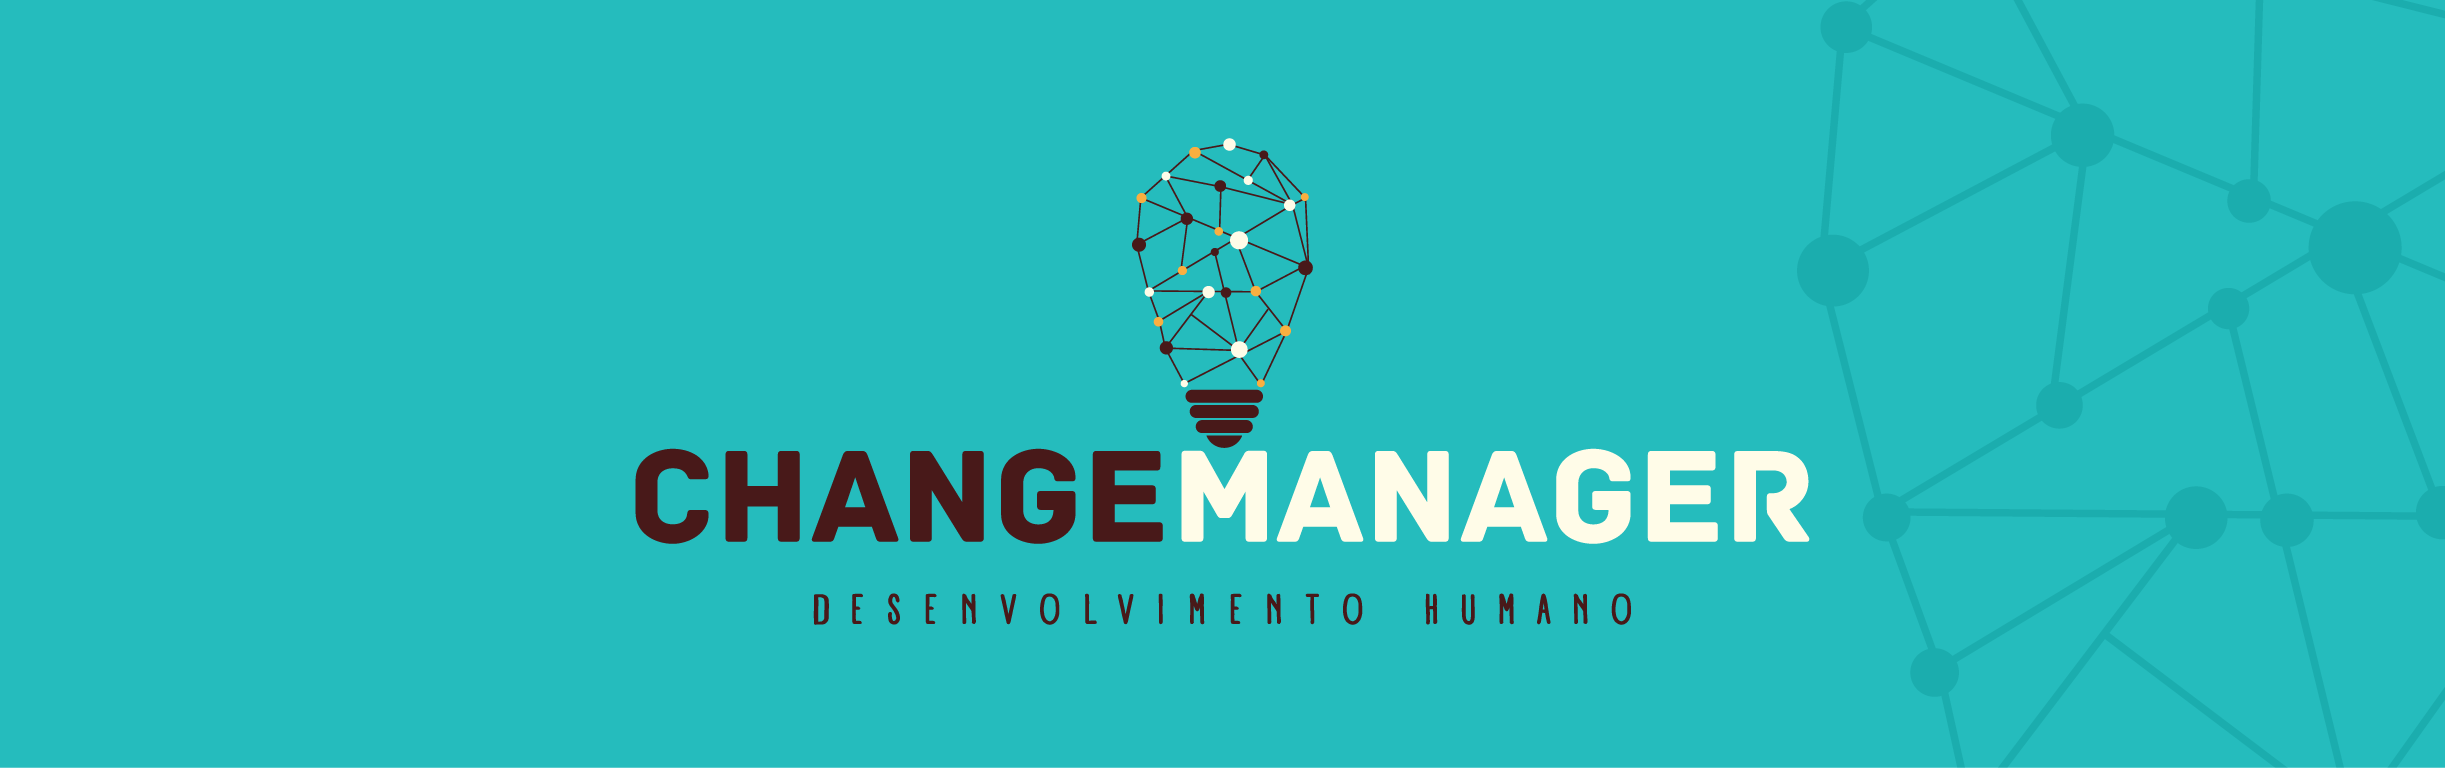 Change Manager Desenvolvimento Humano